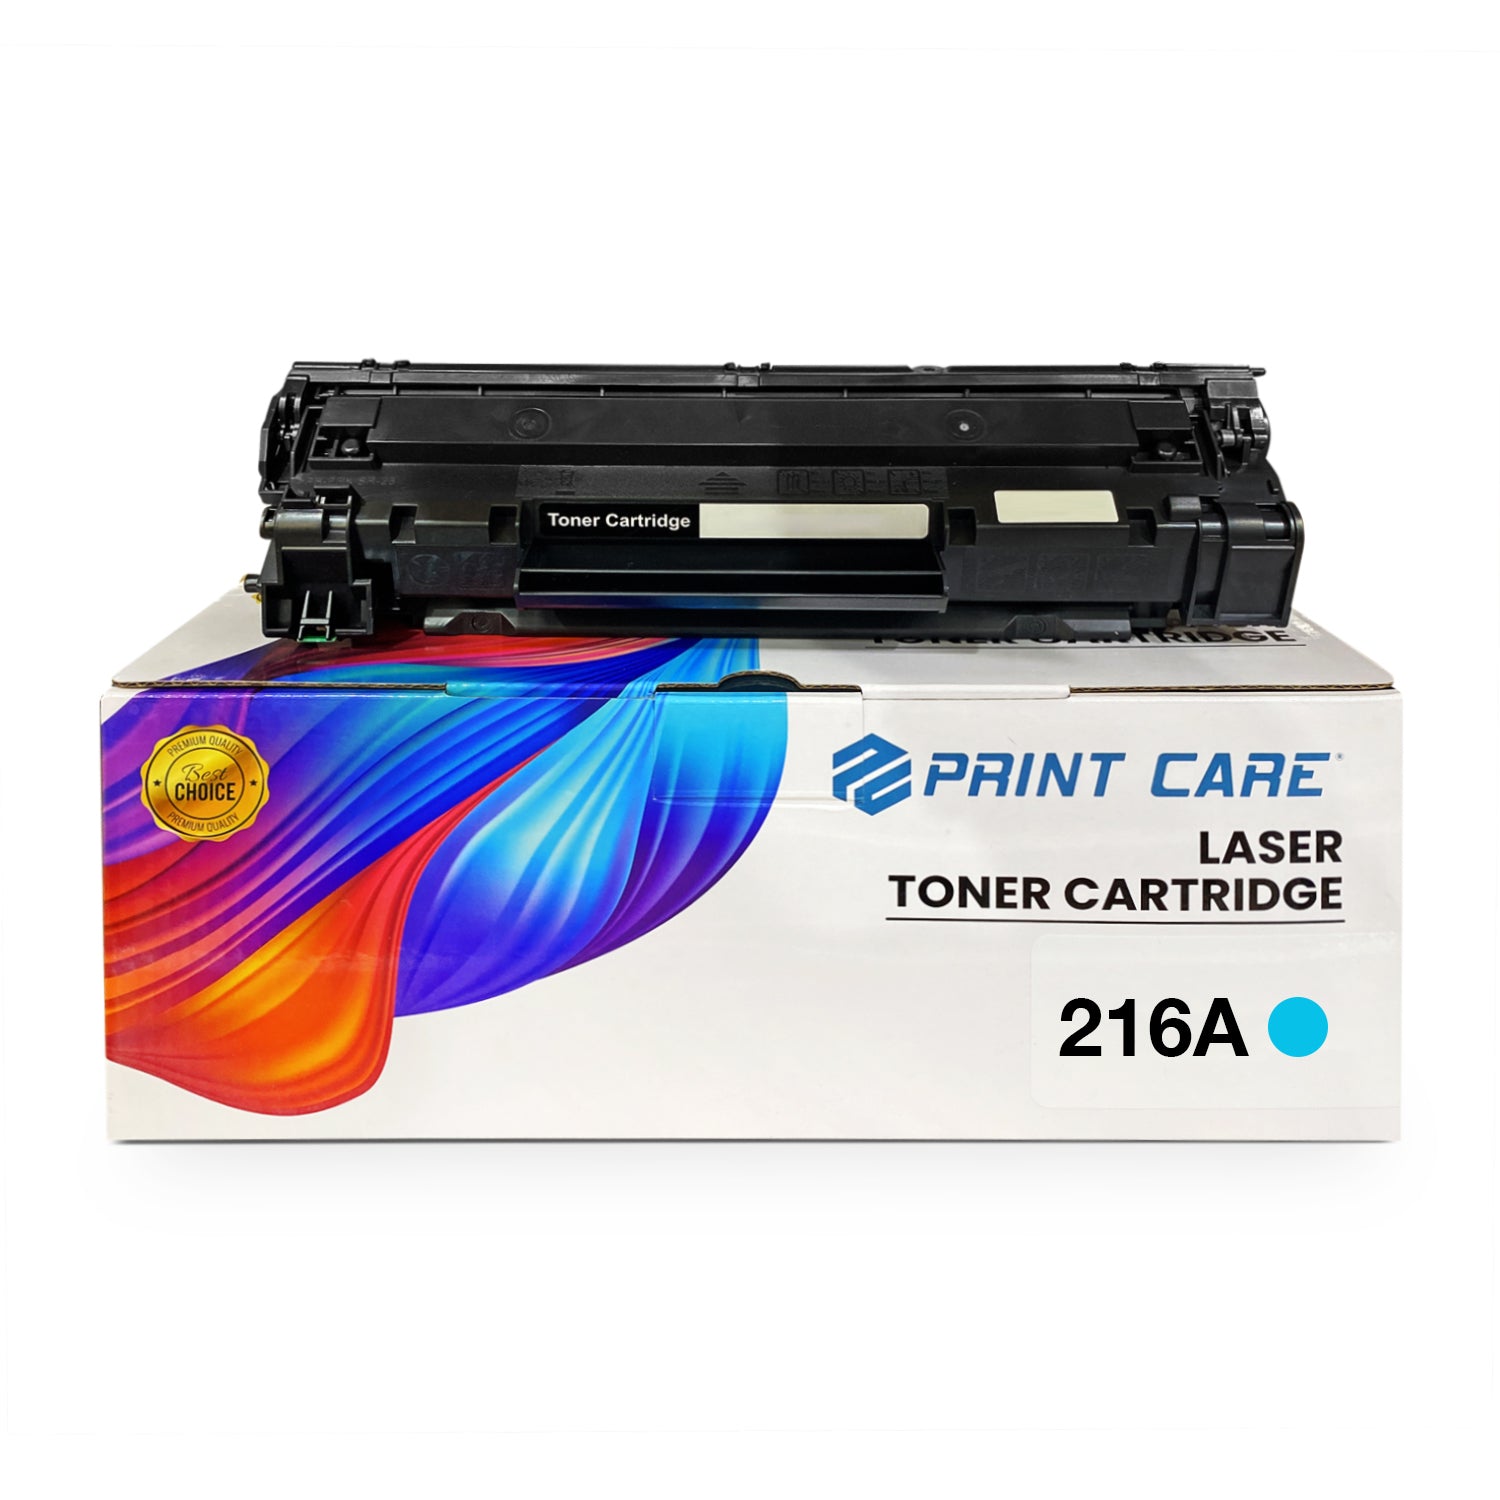 Print Care 216A Cyan Color – 850 pages / Cyan Color / Toner Cartridge – (W2411A)